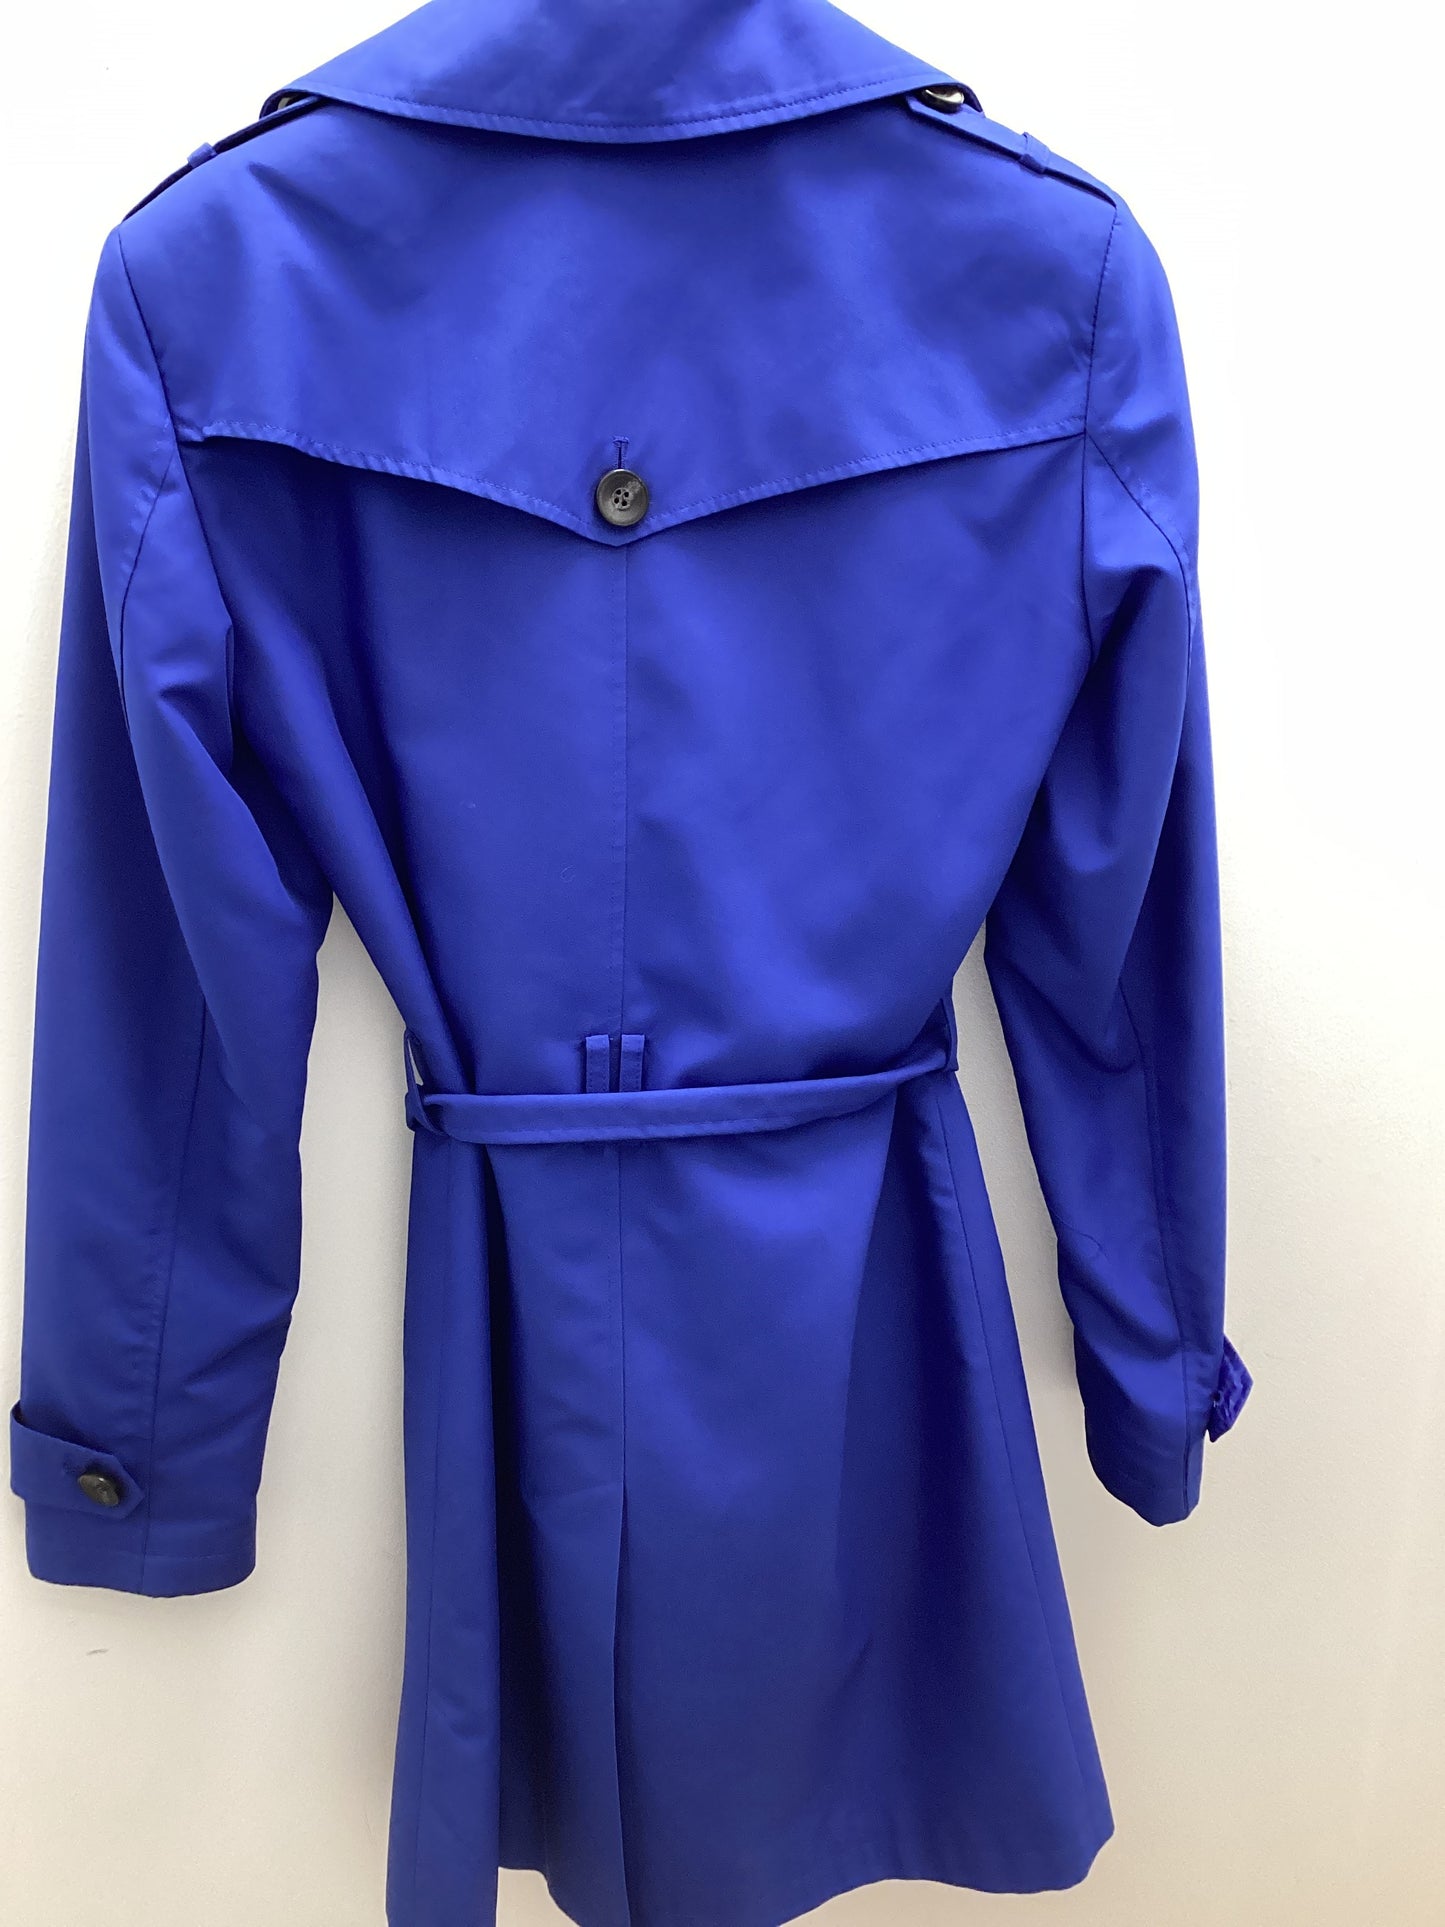 M&S Women’s Blue Coat Size UK 8